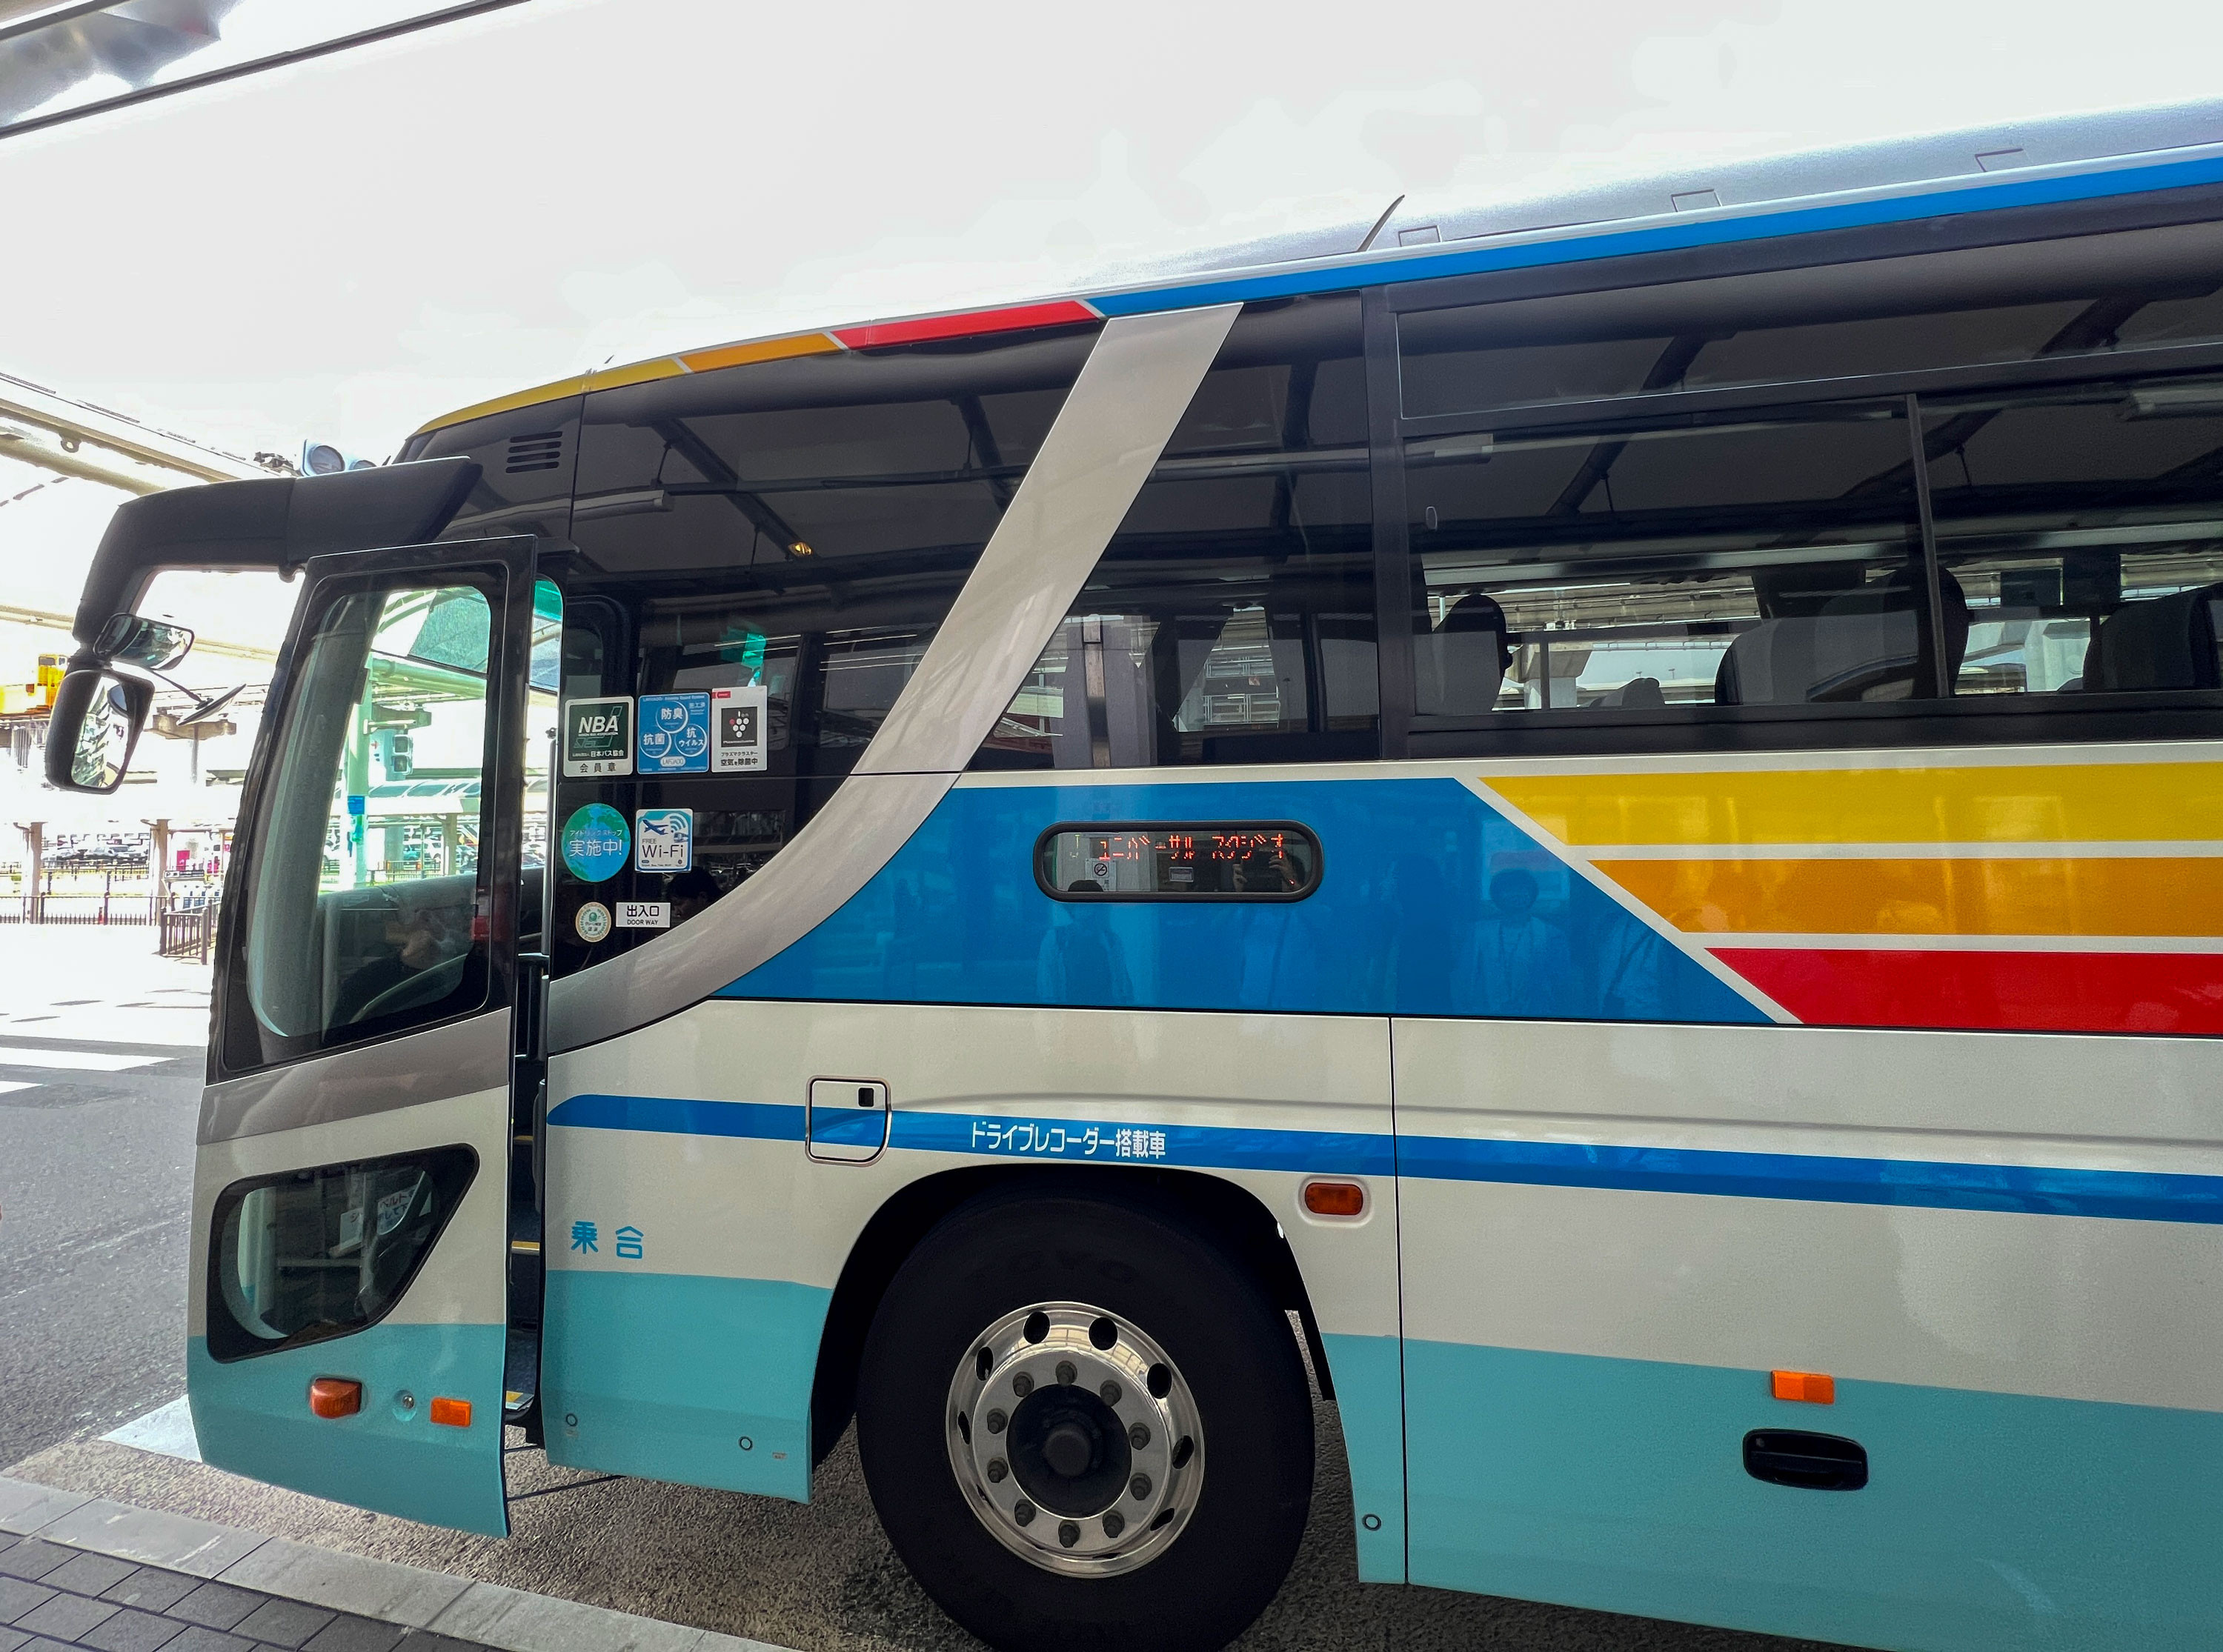 Usj 伊丹空港からバスが便利 所要時間や金額まとめ 電車とタクシーと比較も